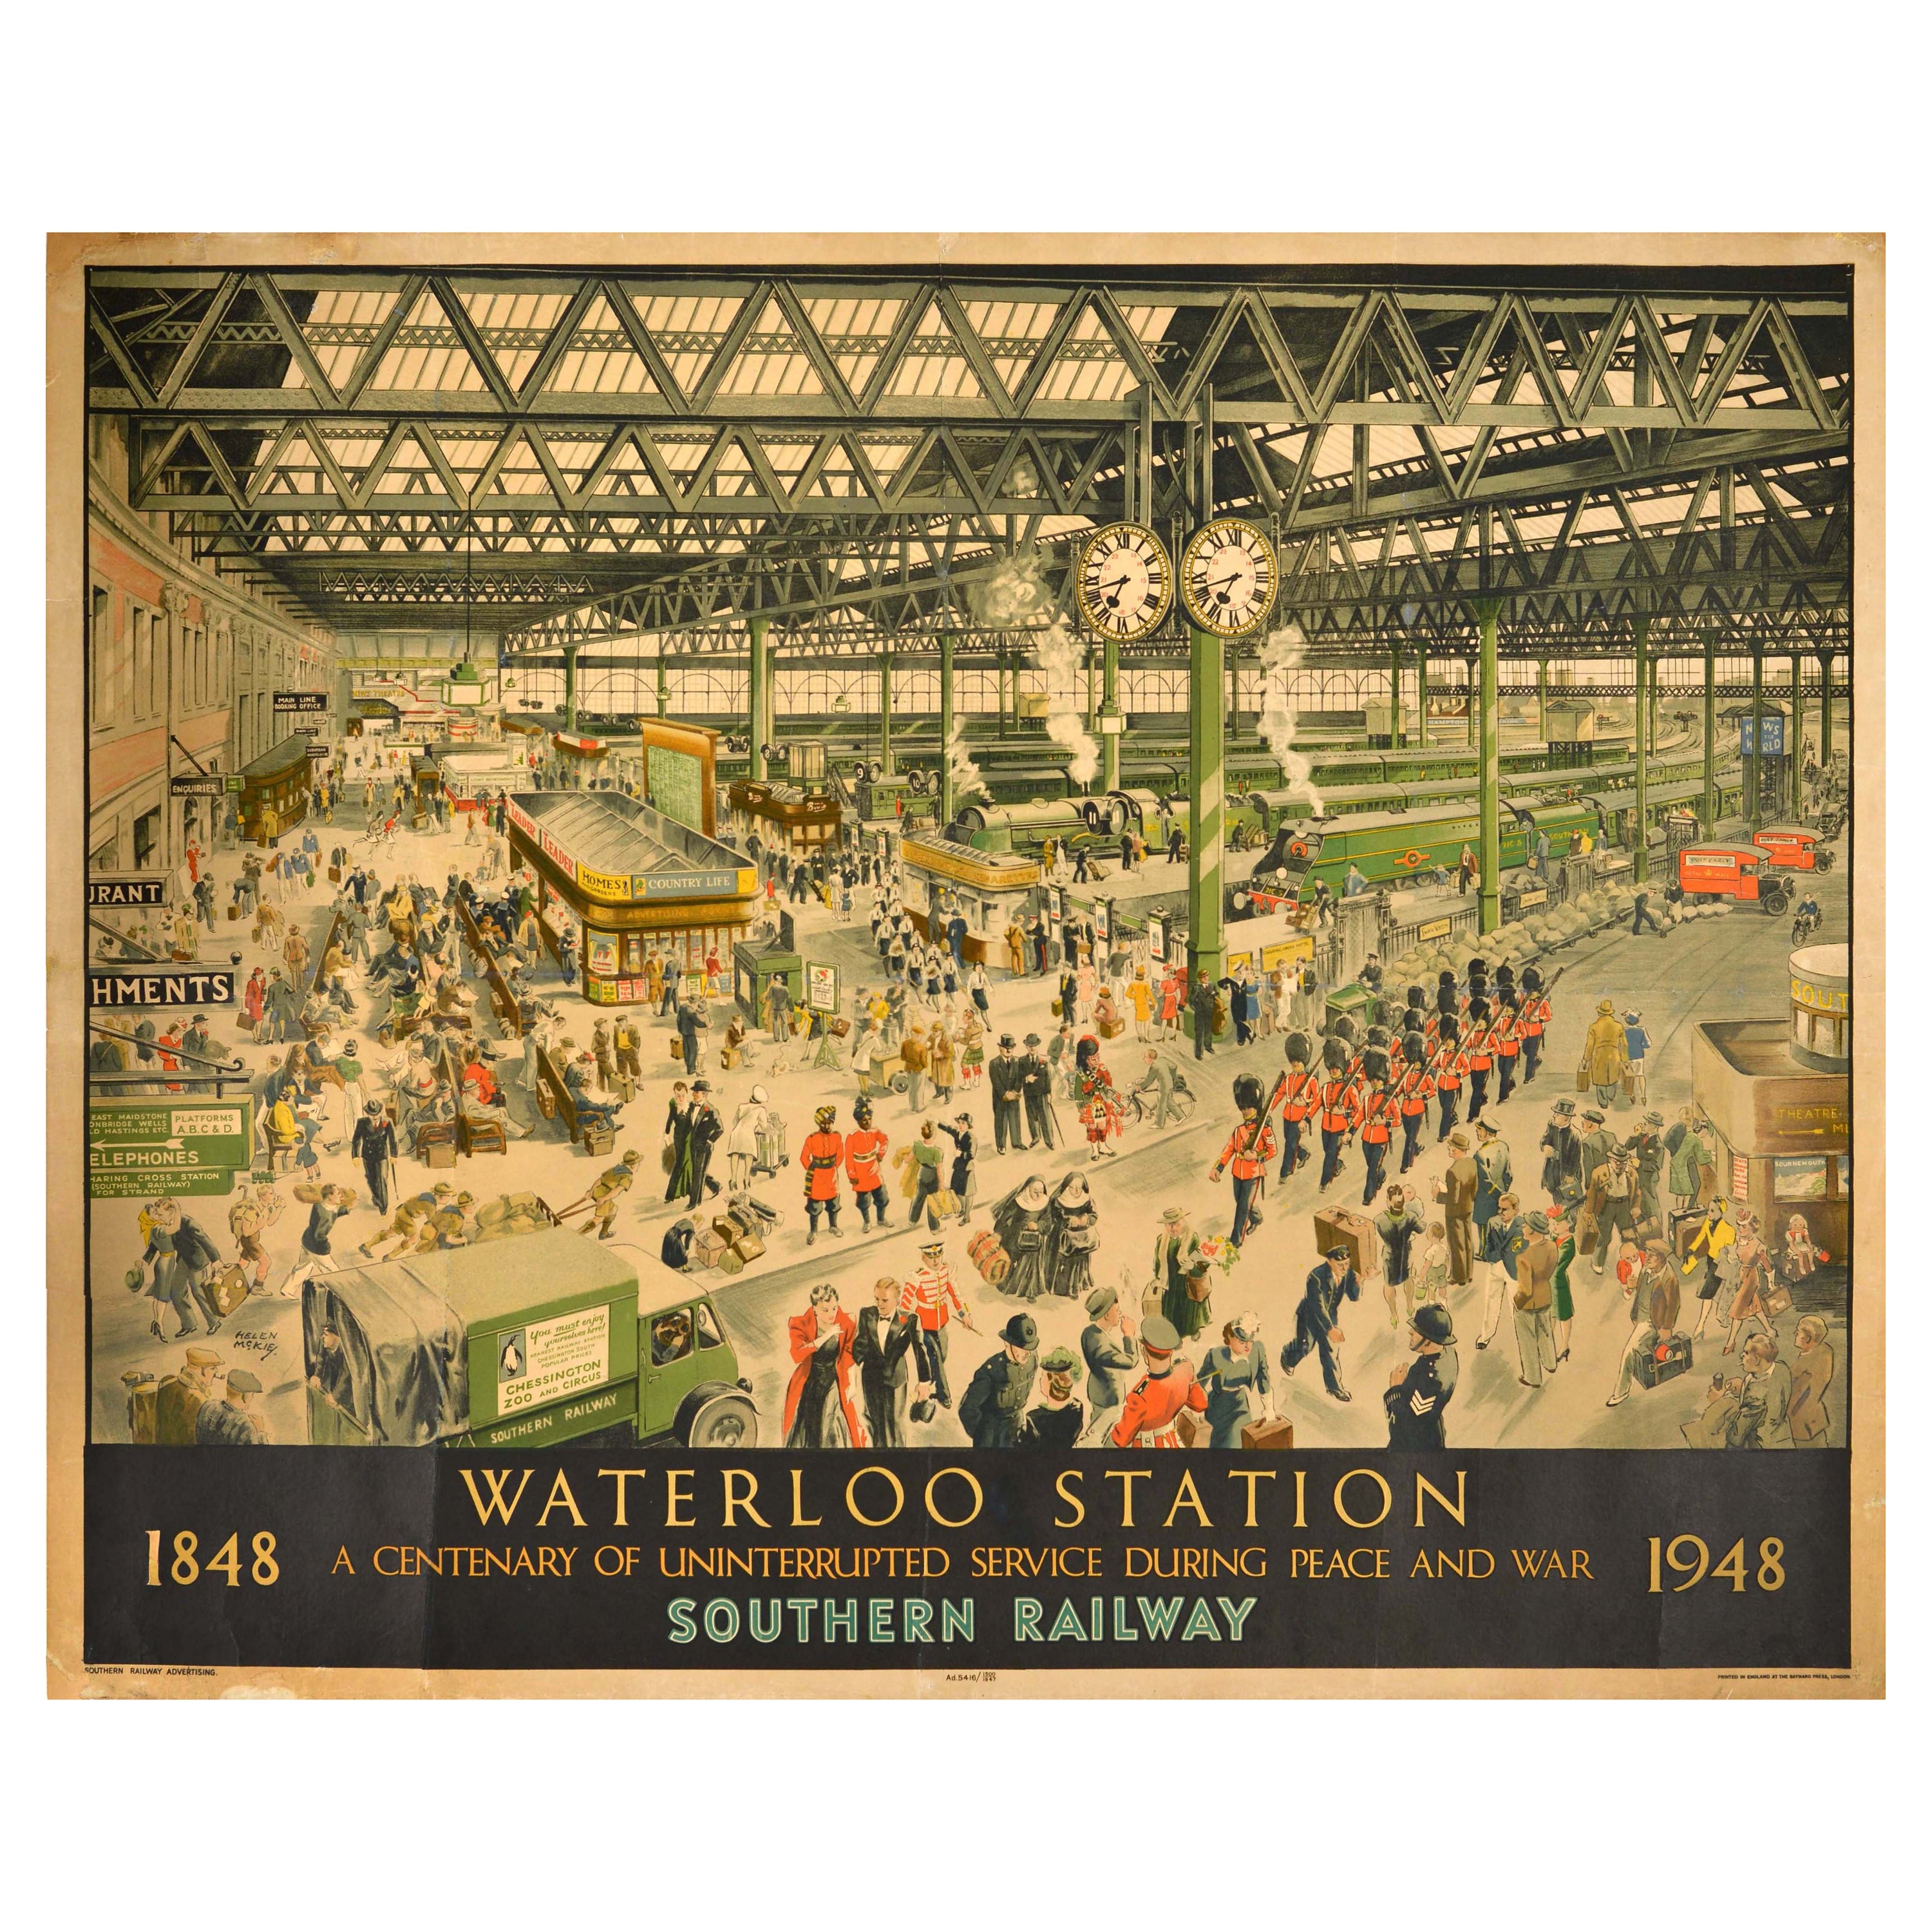 Affiche publicitaire originale de voyage Waterloo Station Southern Railway